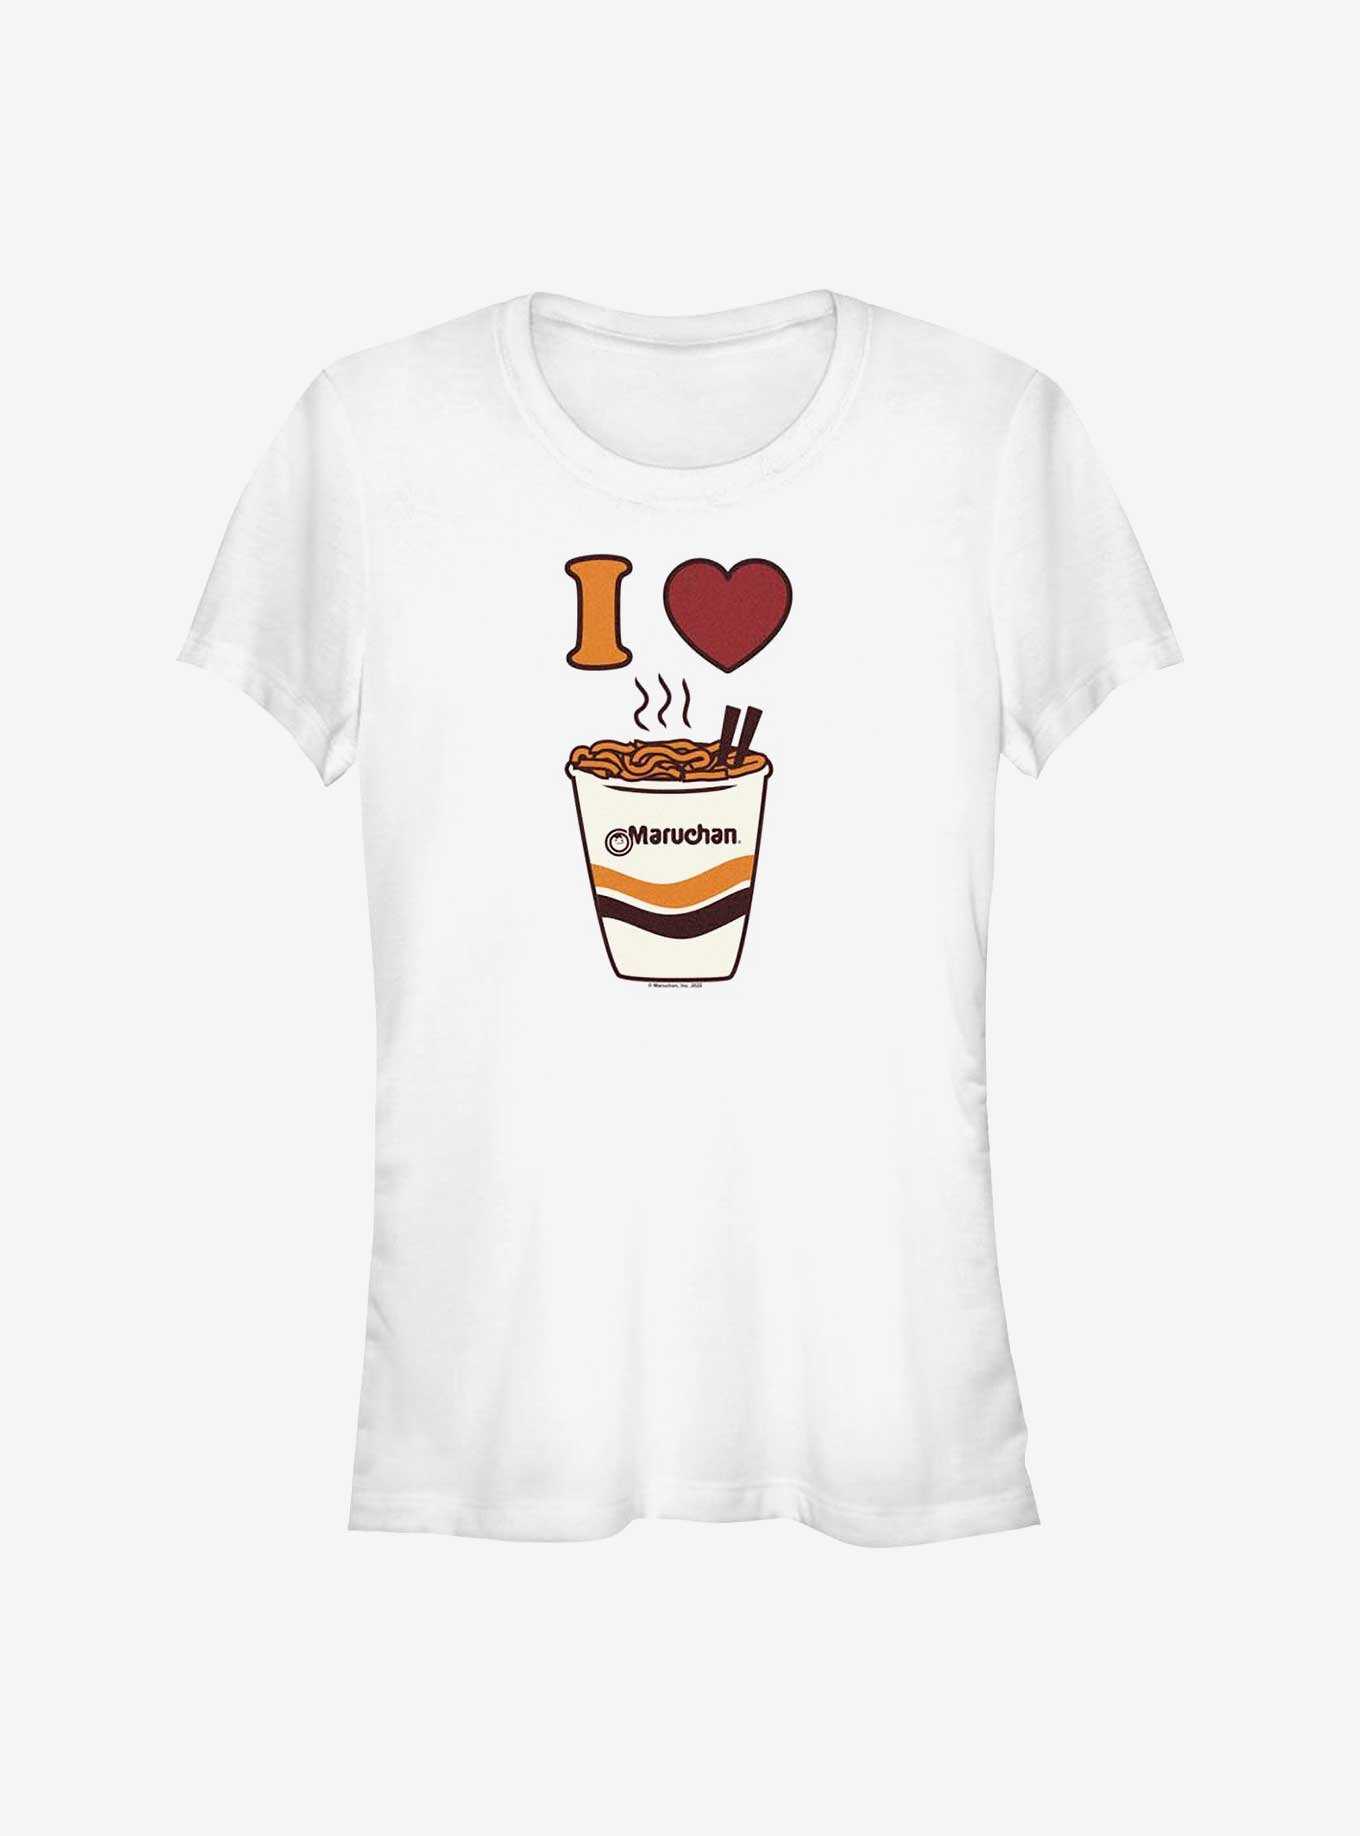 Maruchan I Heart Maruchan Girls T-Shirt, , hi-res